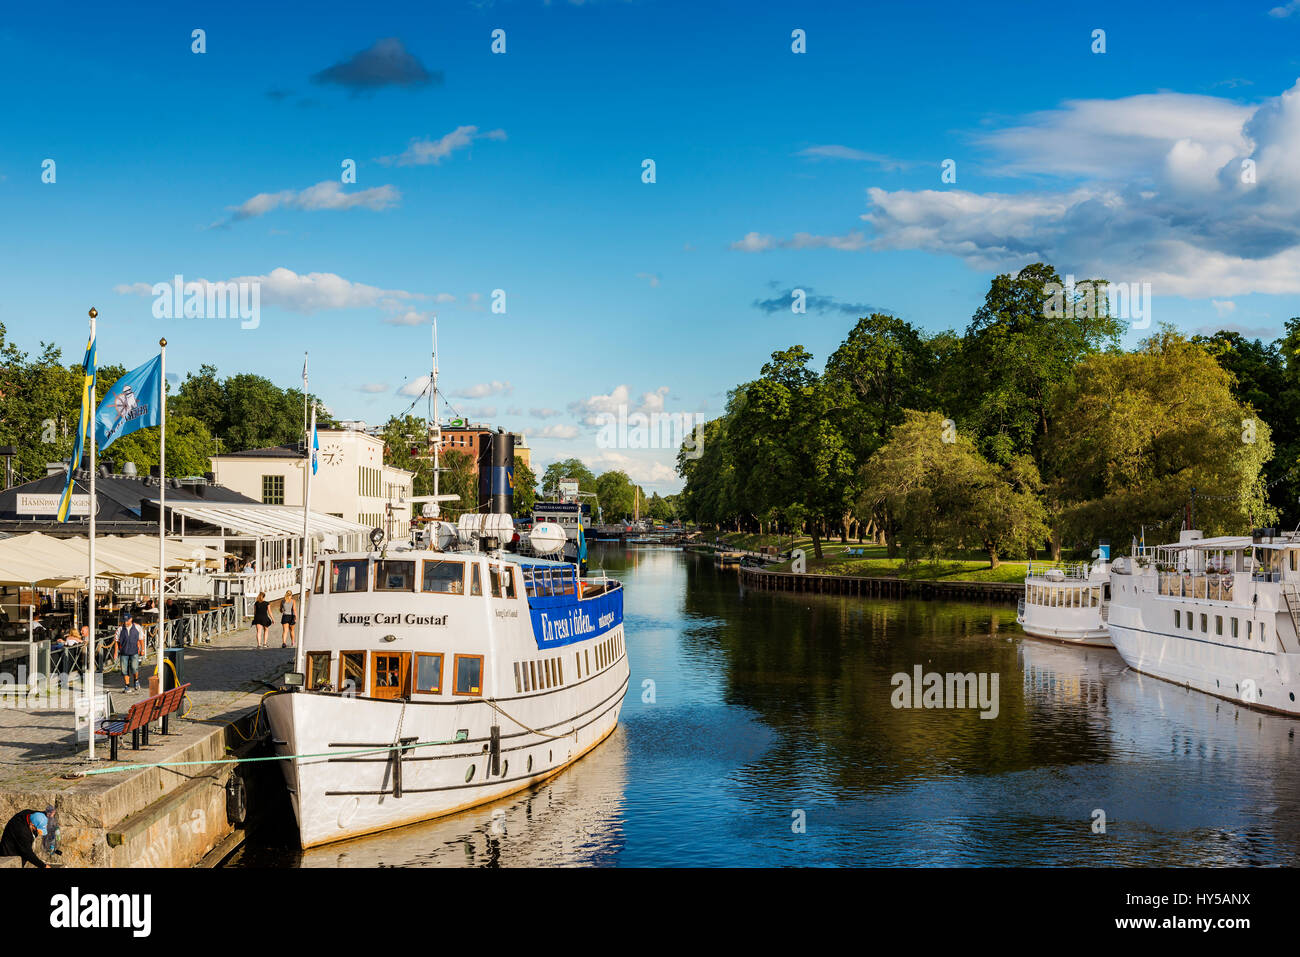 Sweden, Uppland, Uppsala, Fyris, Boats moored in canal Stock Photo